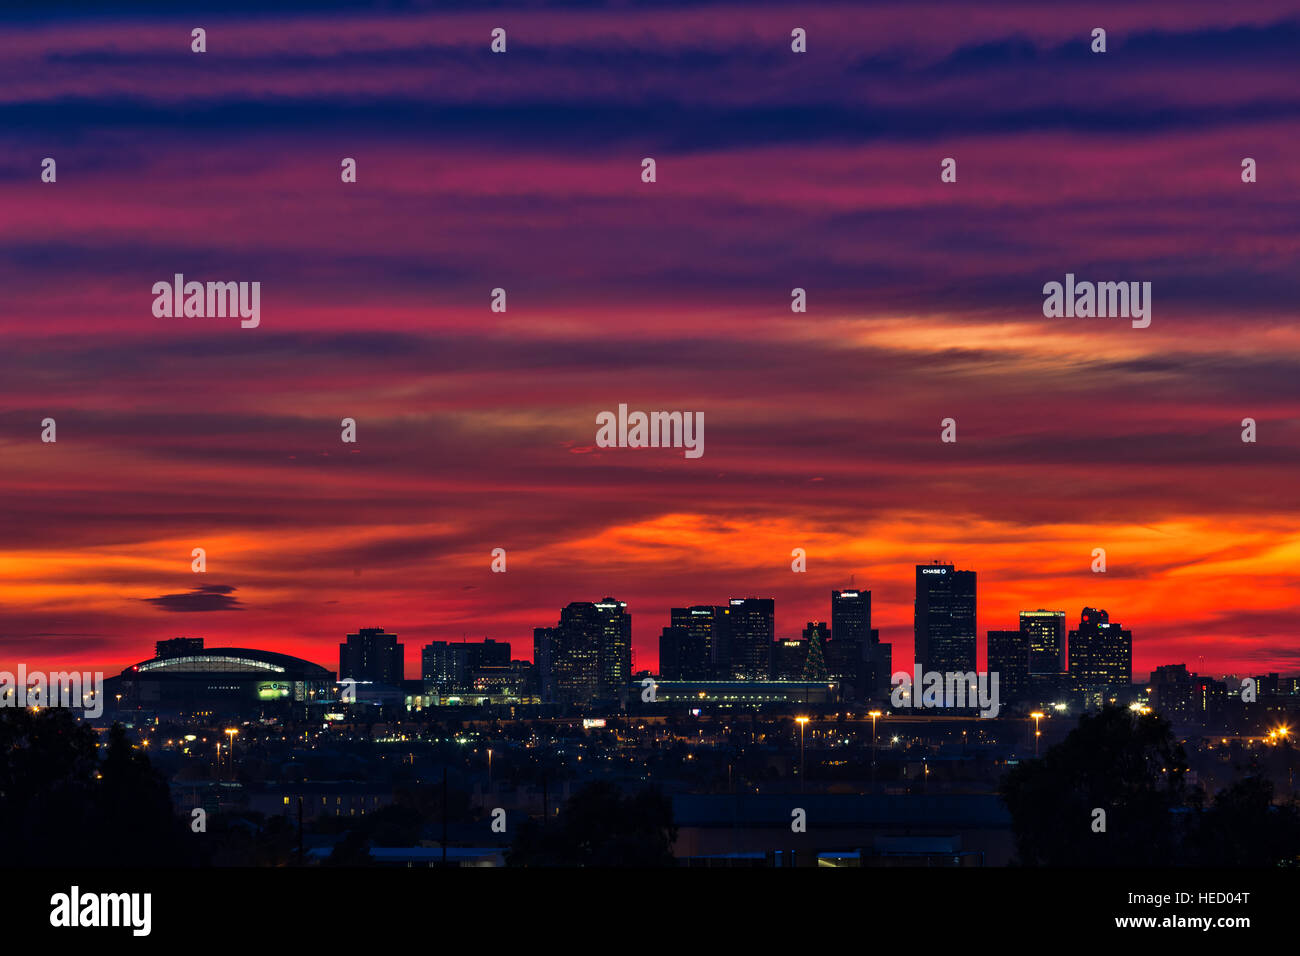 Downtown Phoenix Arizona skyline at sunset Stock Photo